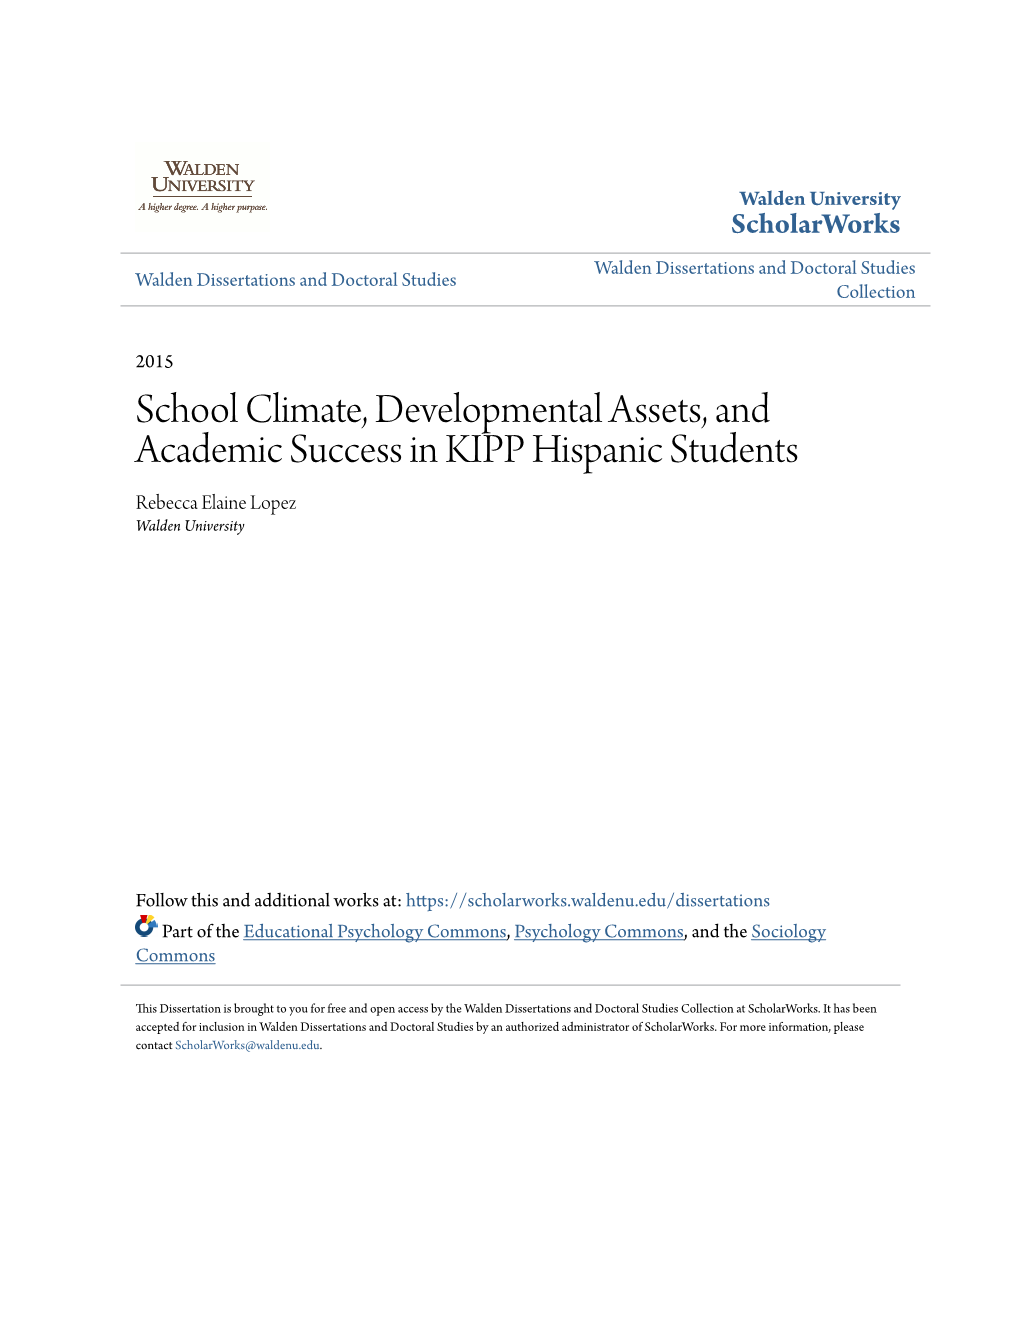 School Climate, Developmental Assets, and Academic Success in KIPP Hispanic Students Rebecca Elaine Lopez Walden University